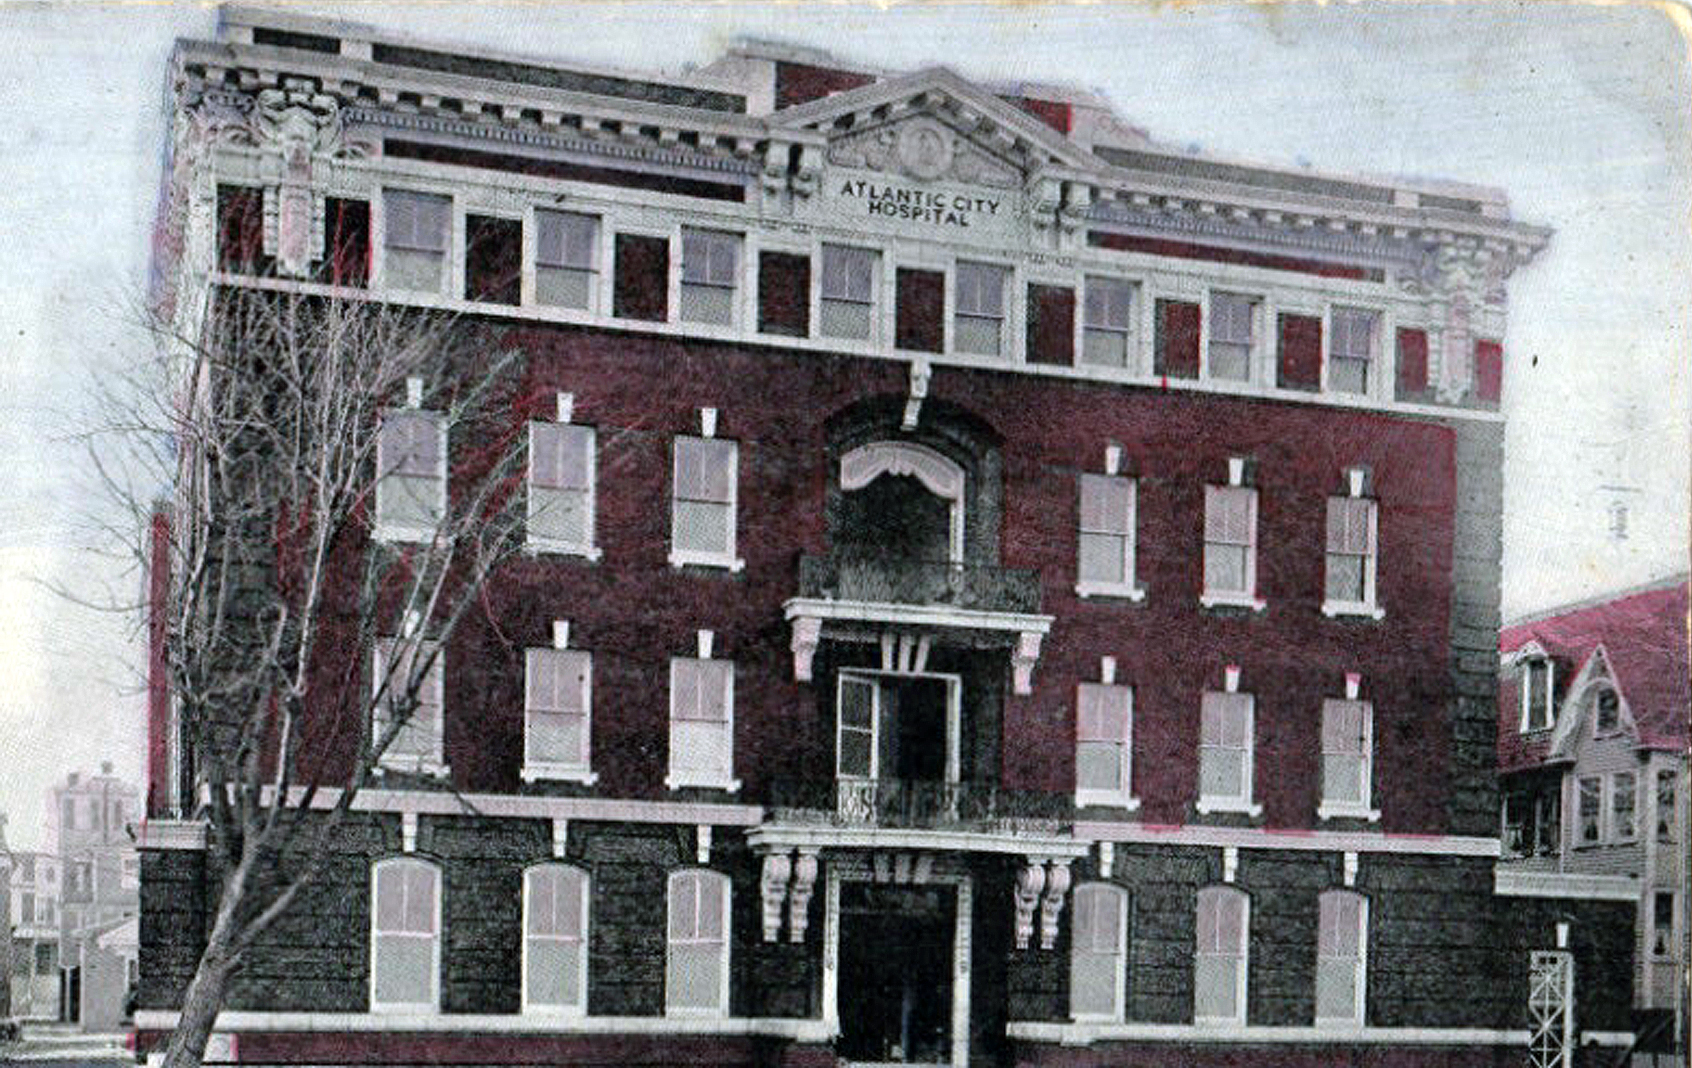 Atlantic City - Atlantic City Hospital - 1909